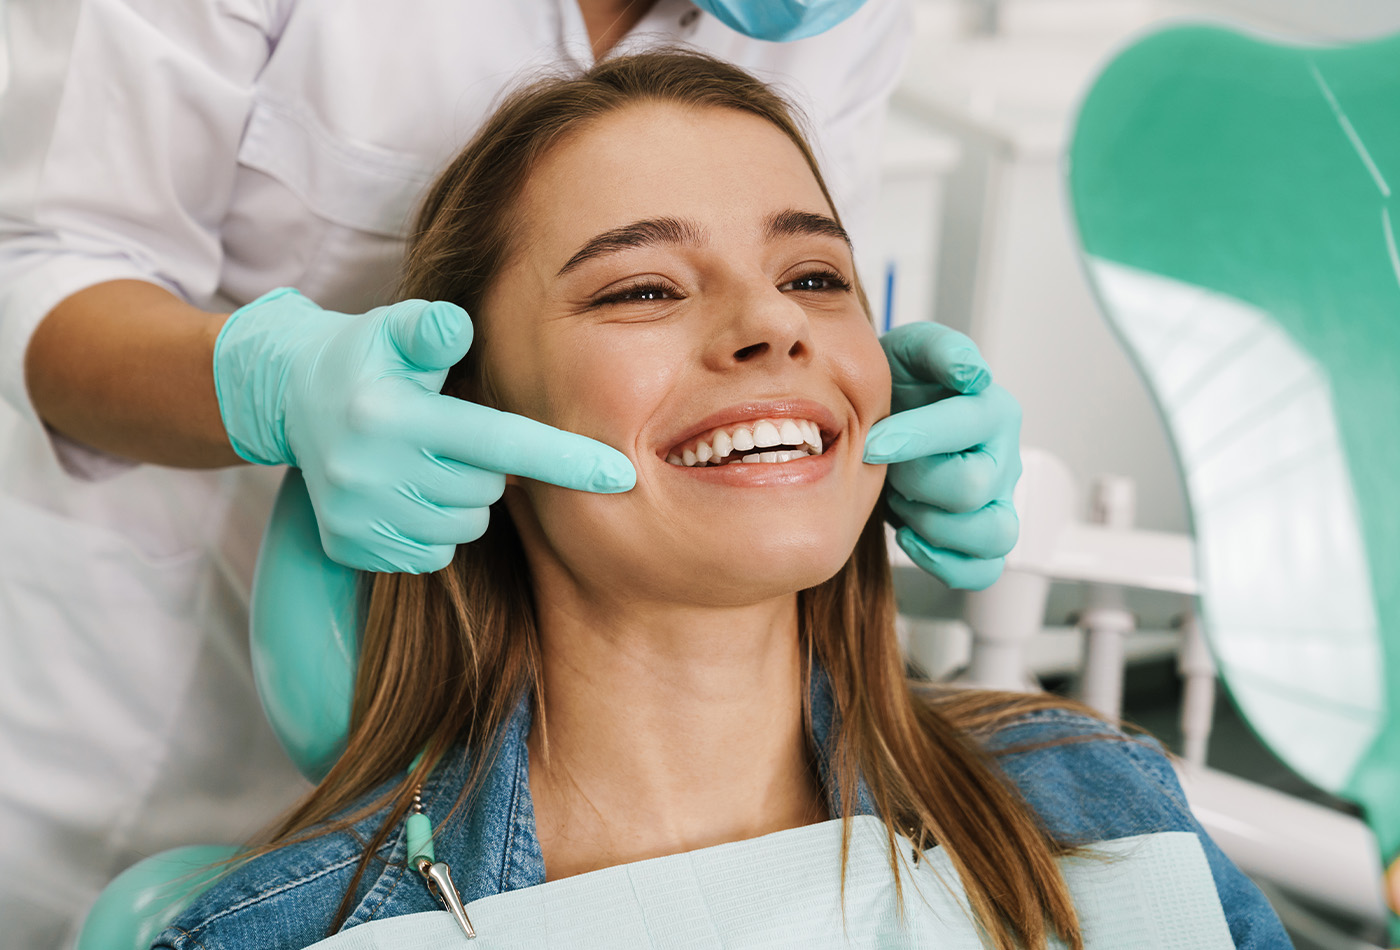 Teeth Whitening for Sensitive Teeth: Methods and Precautions